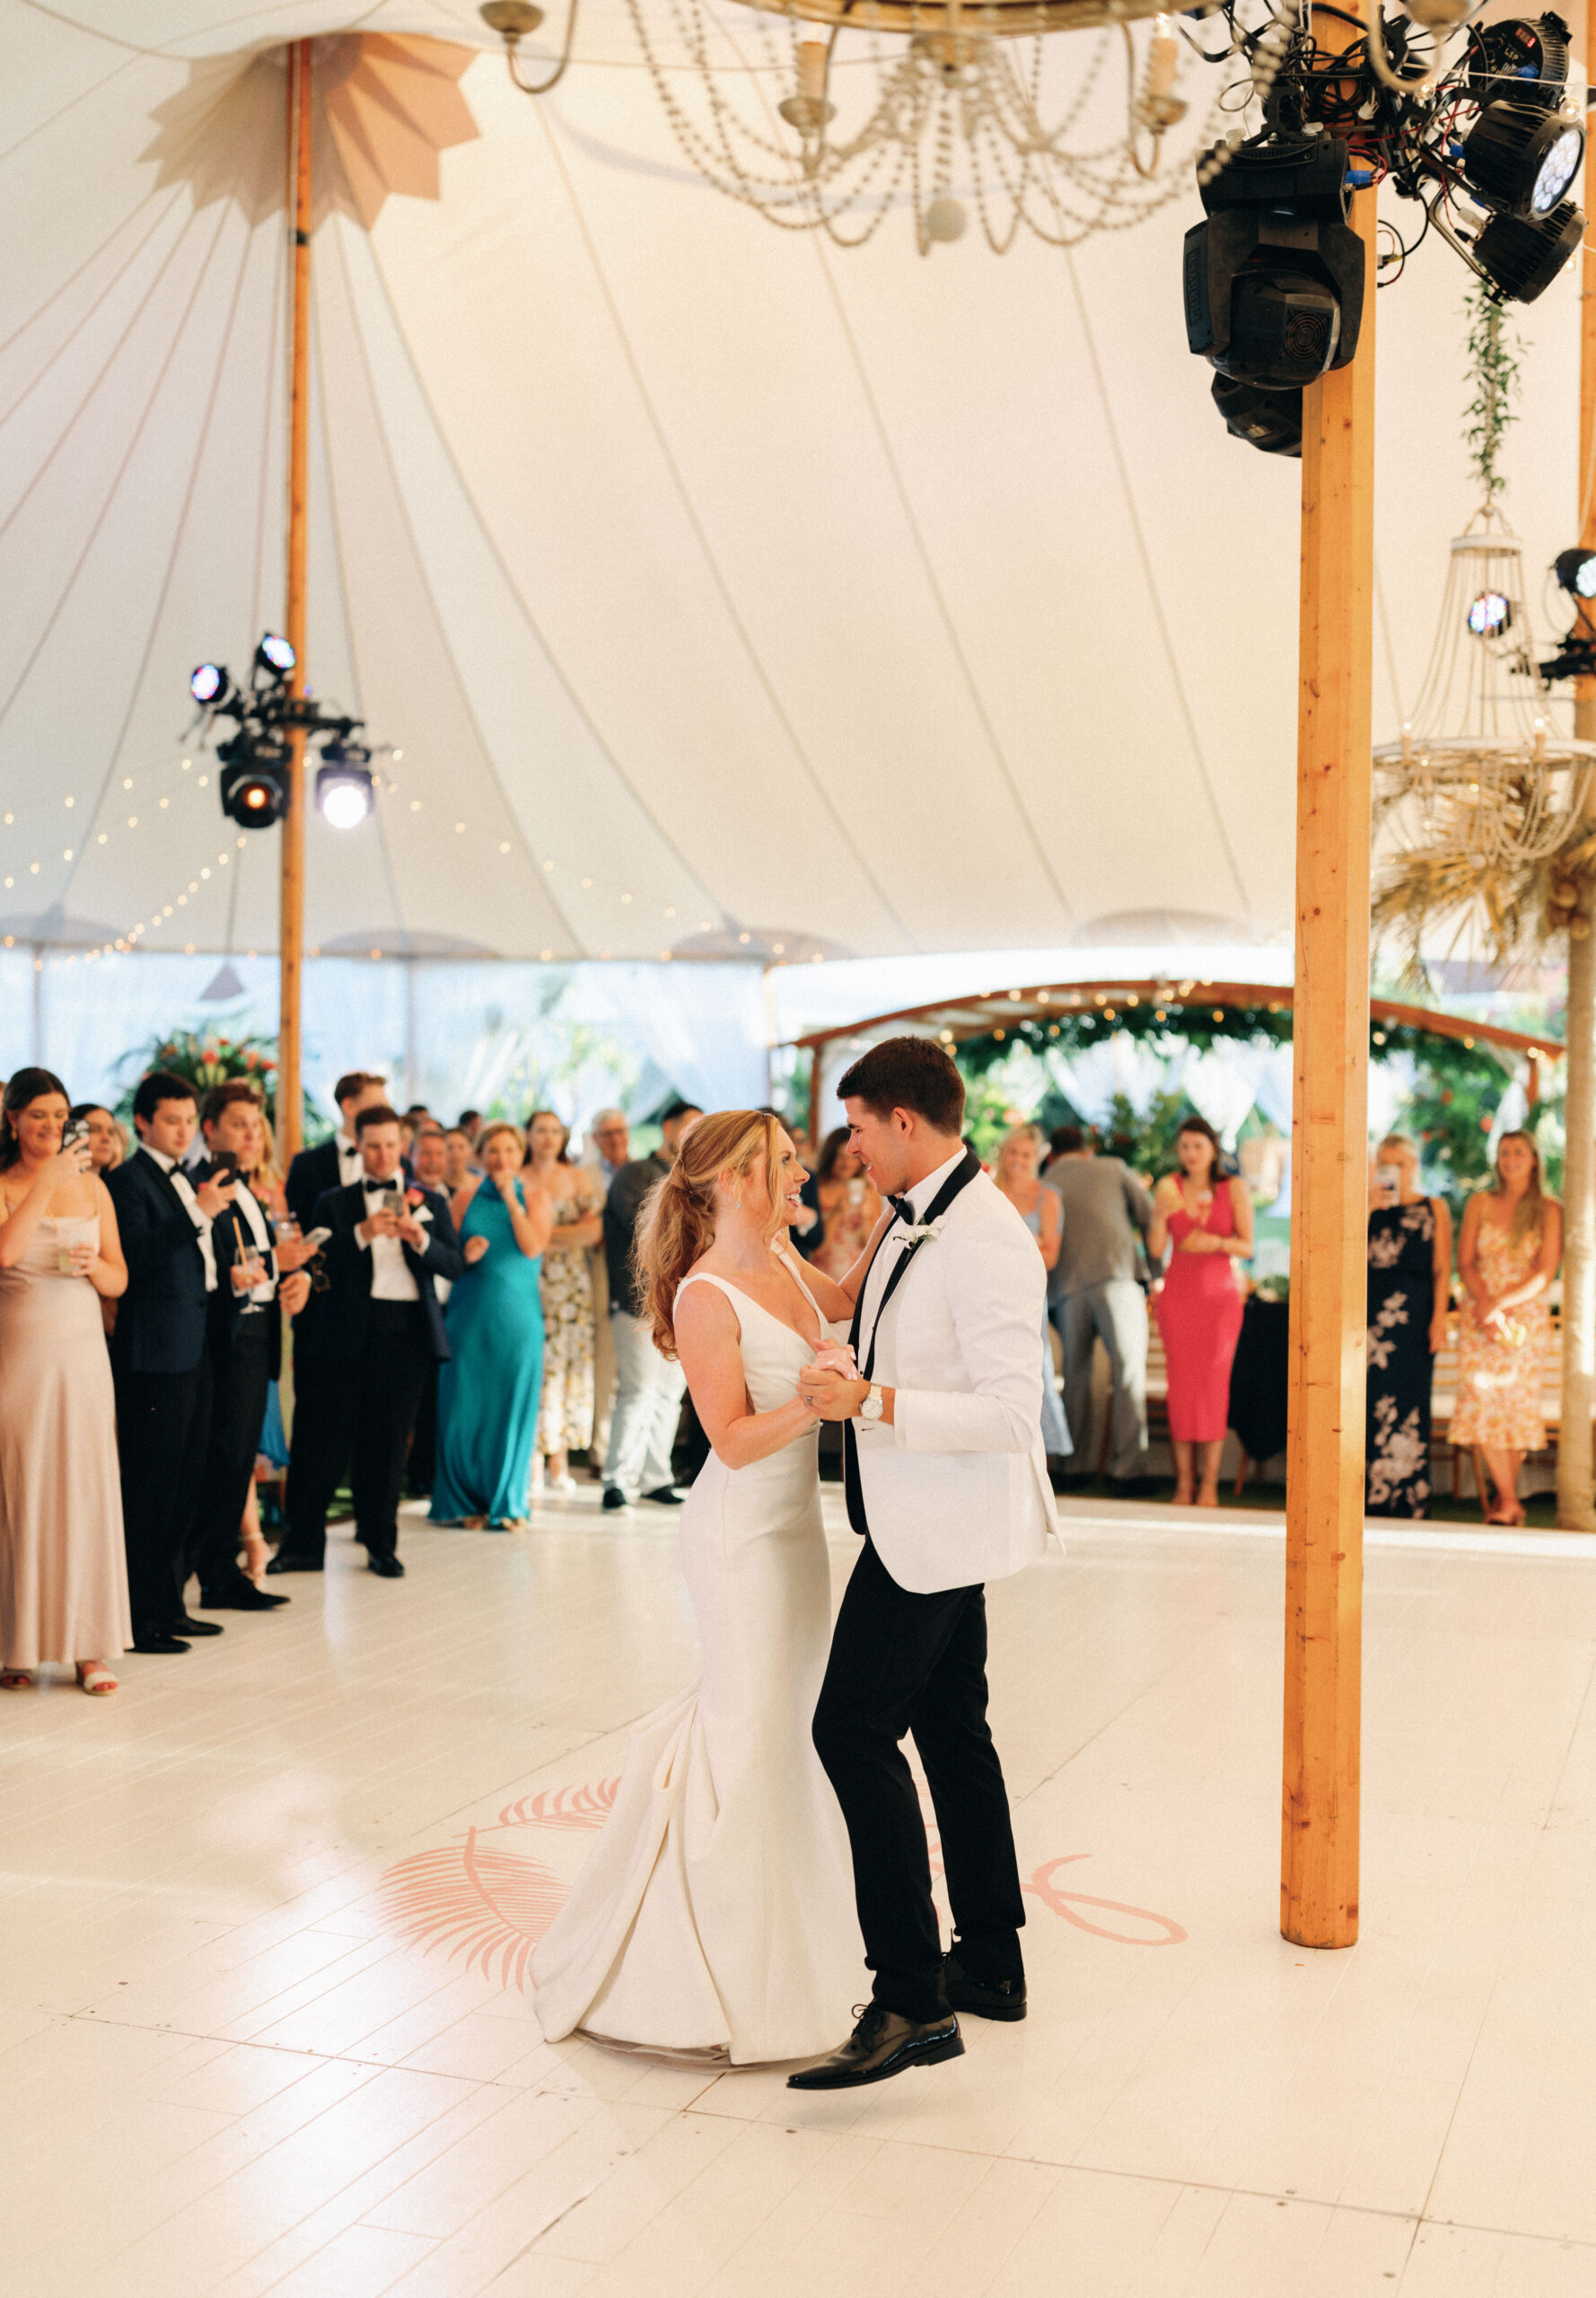 bride and groom dancing on monogrammed dance floor